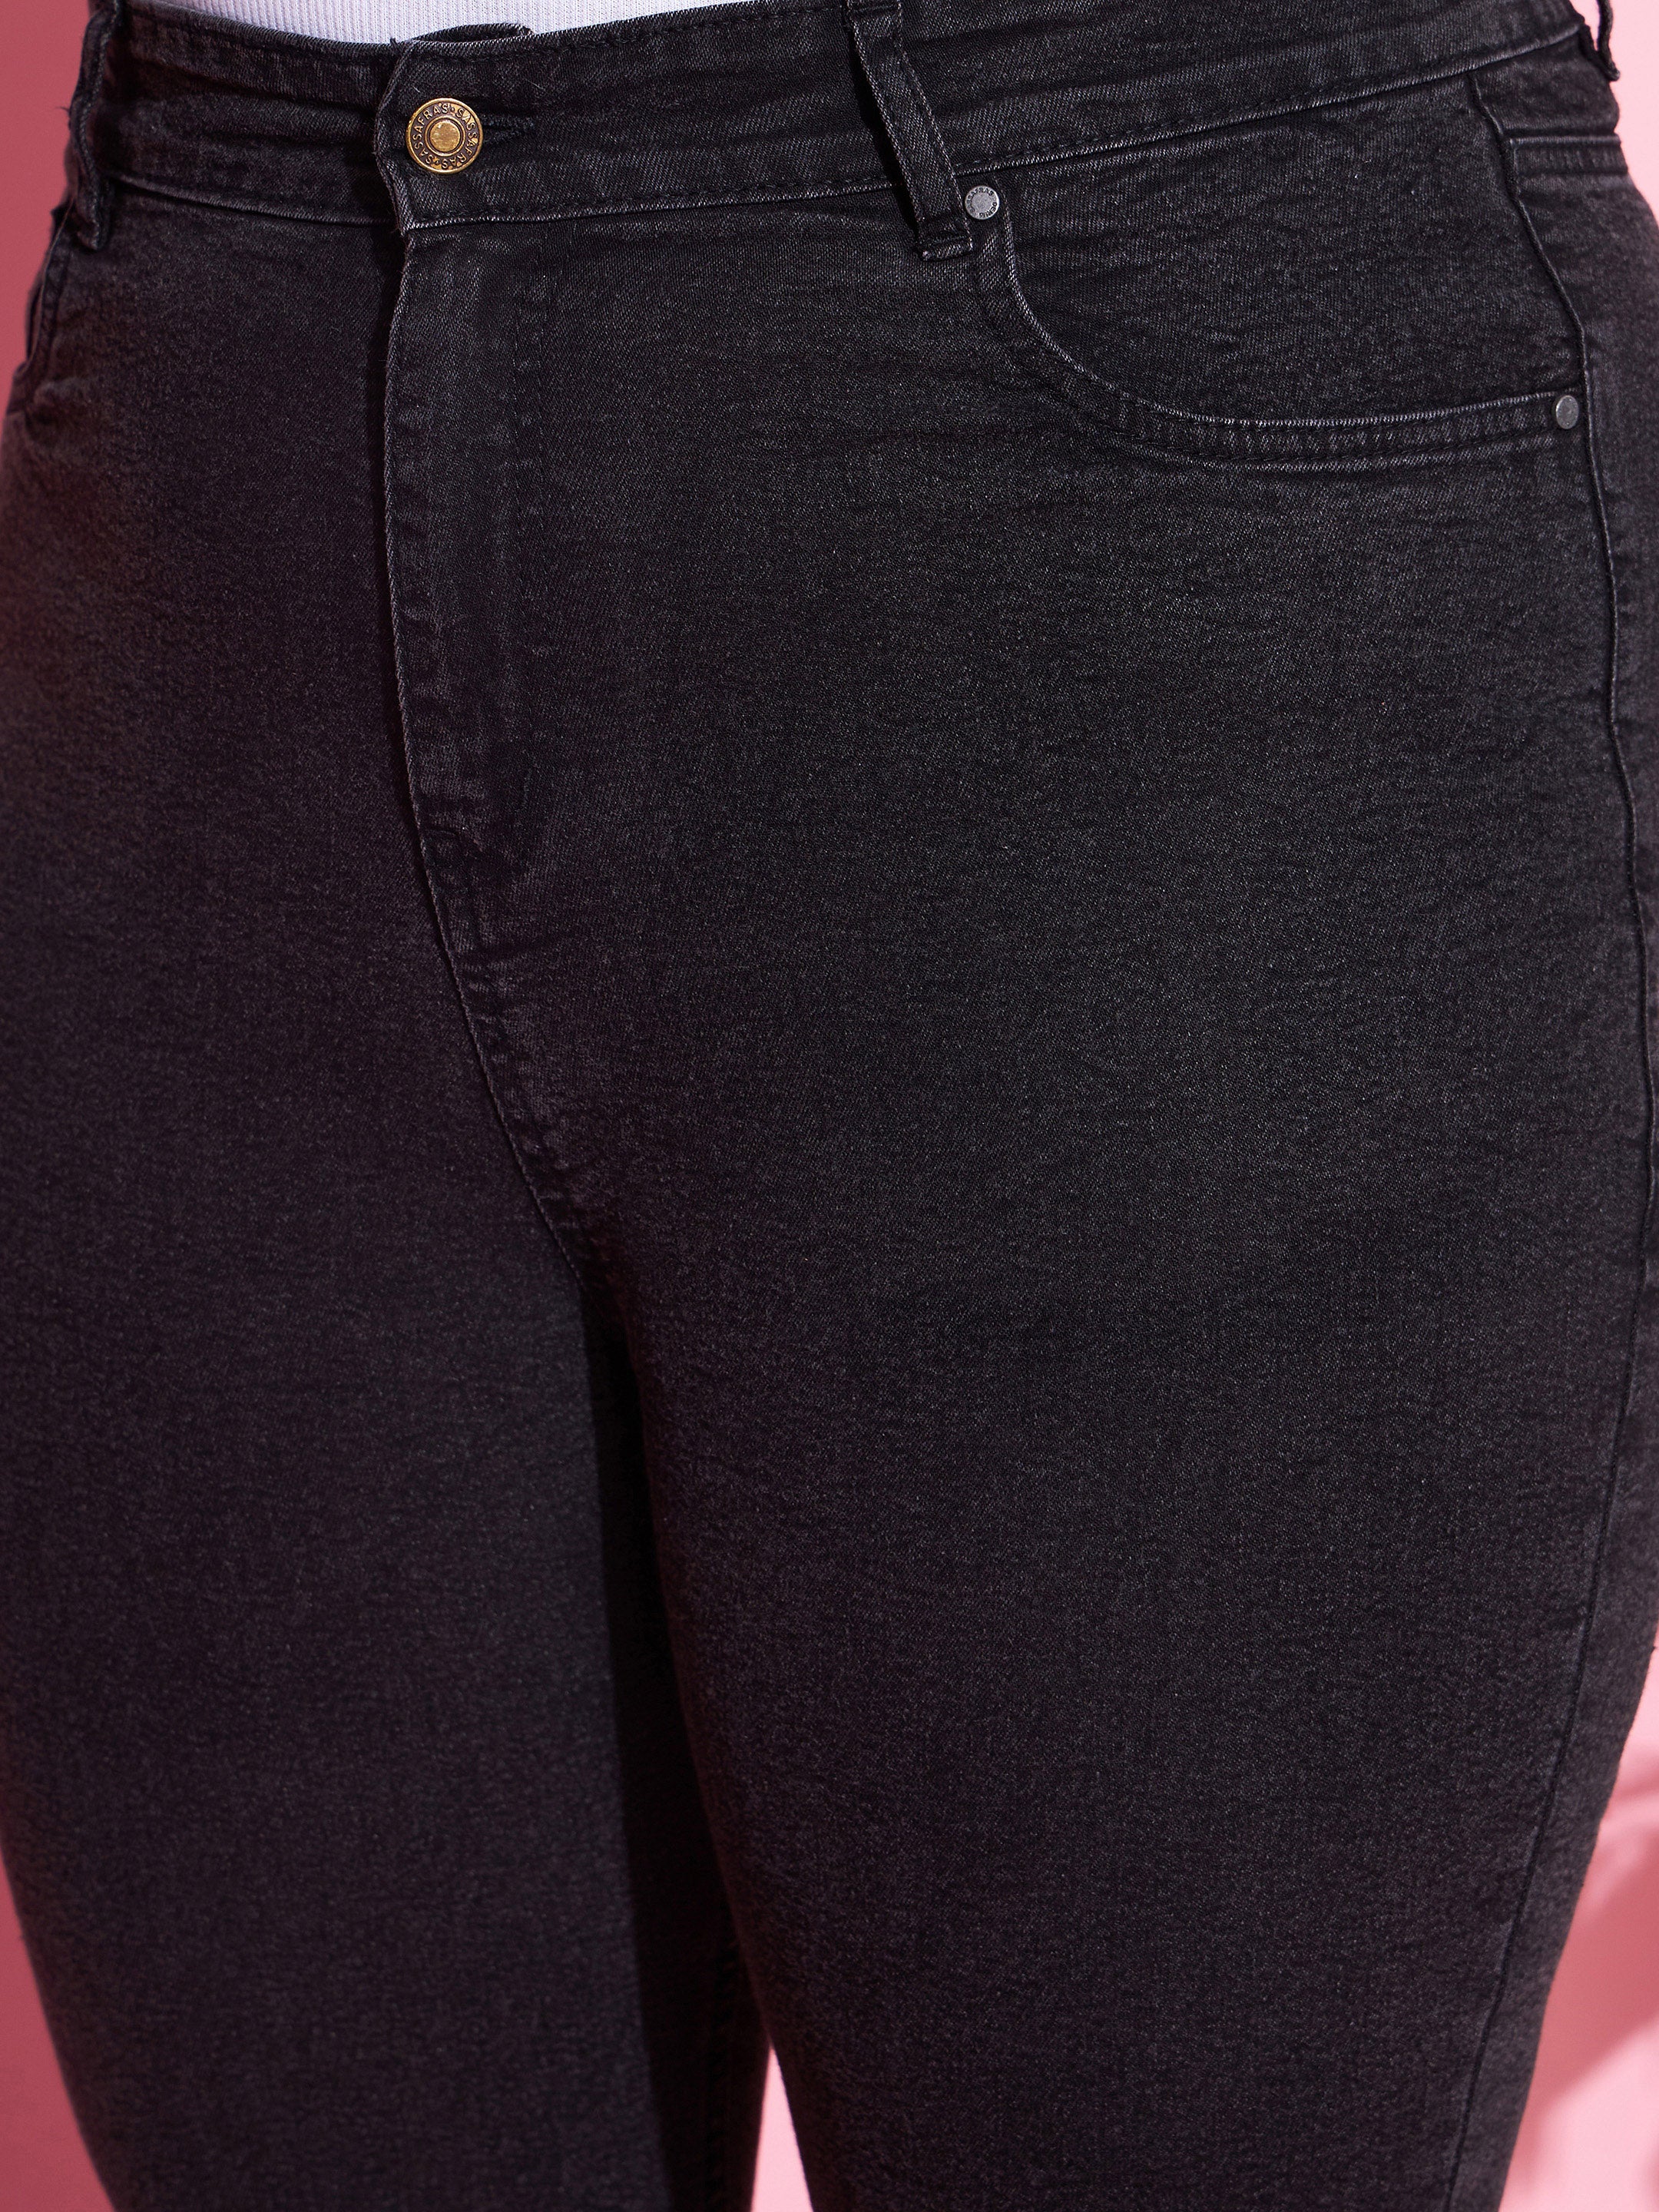 Women's Black Acid Wash Denim Boot Cut Jeans - SASSAFRAS